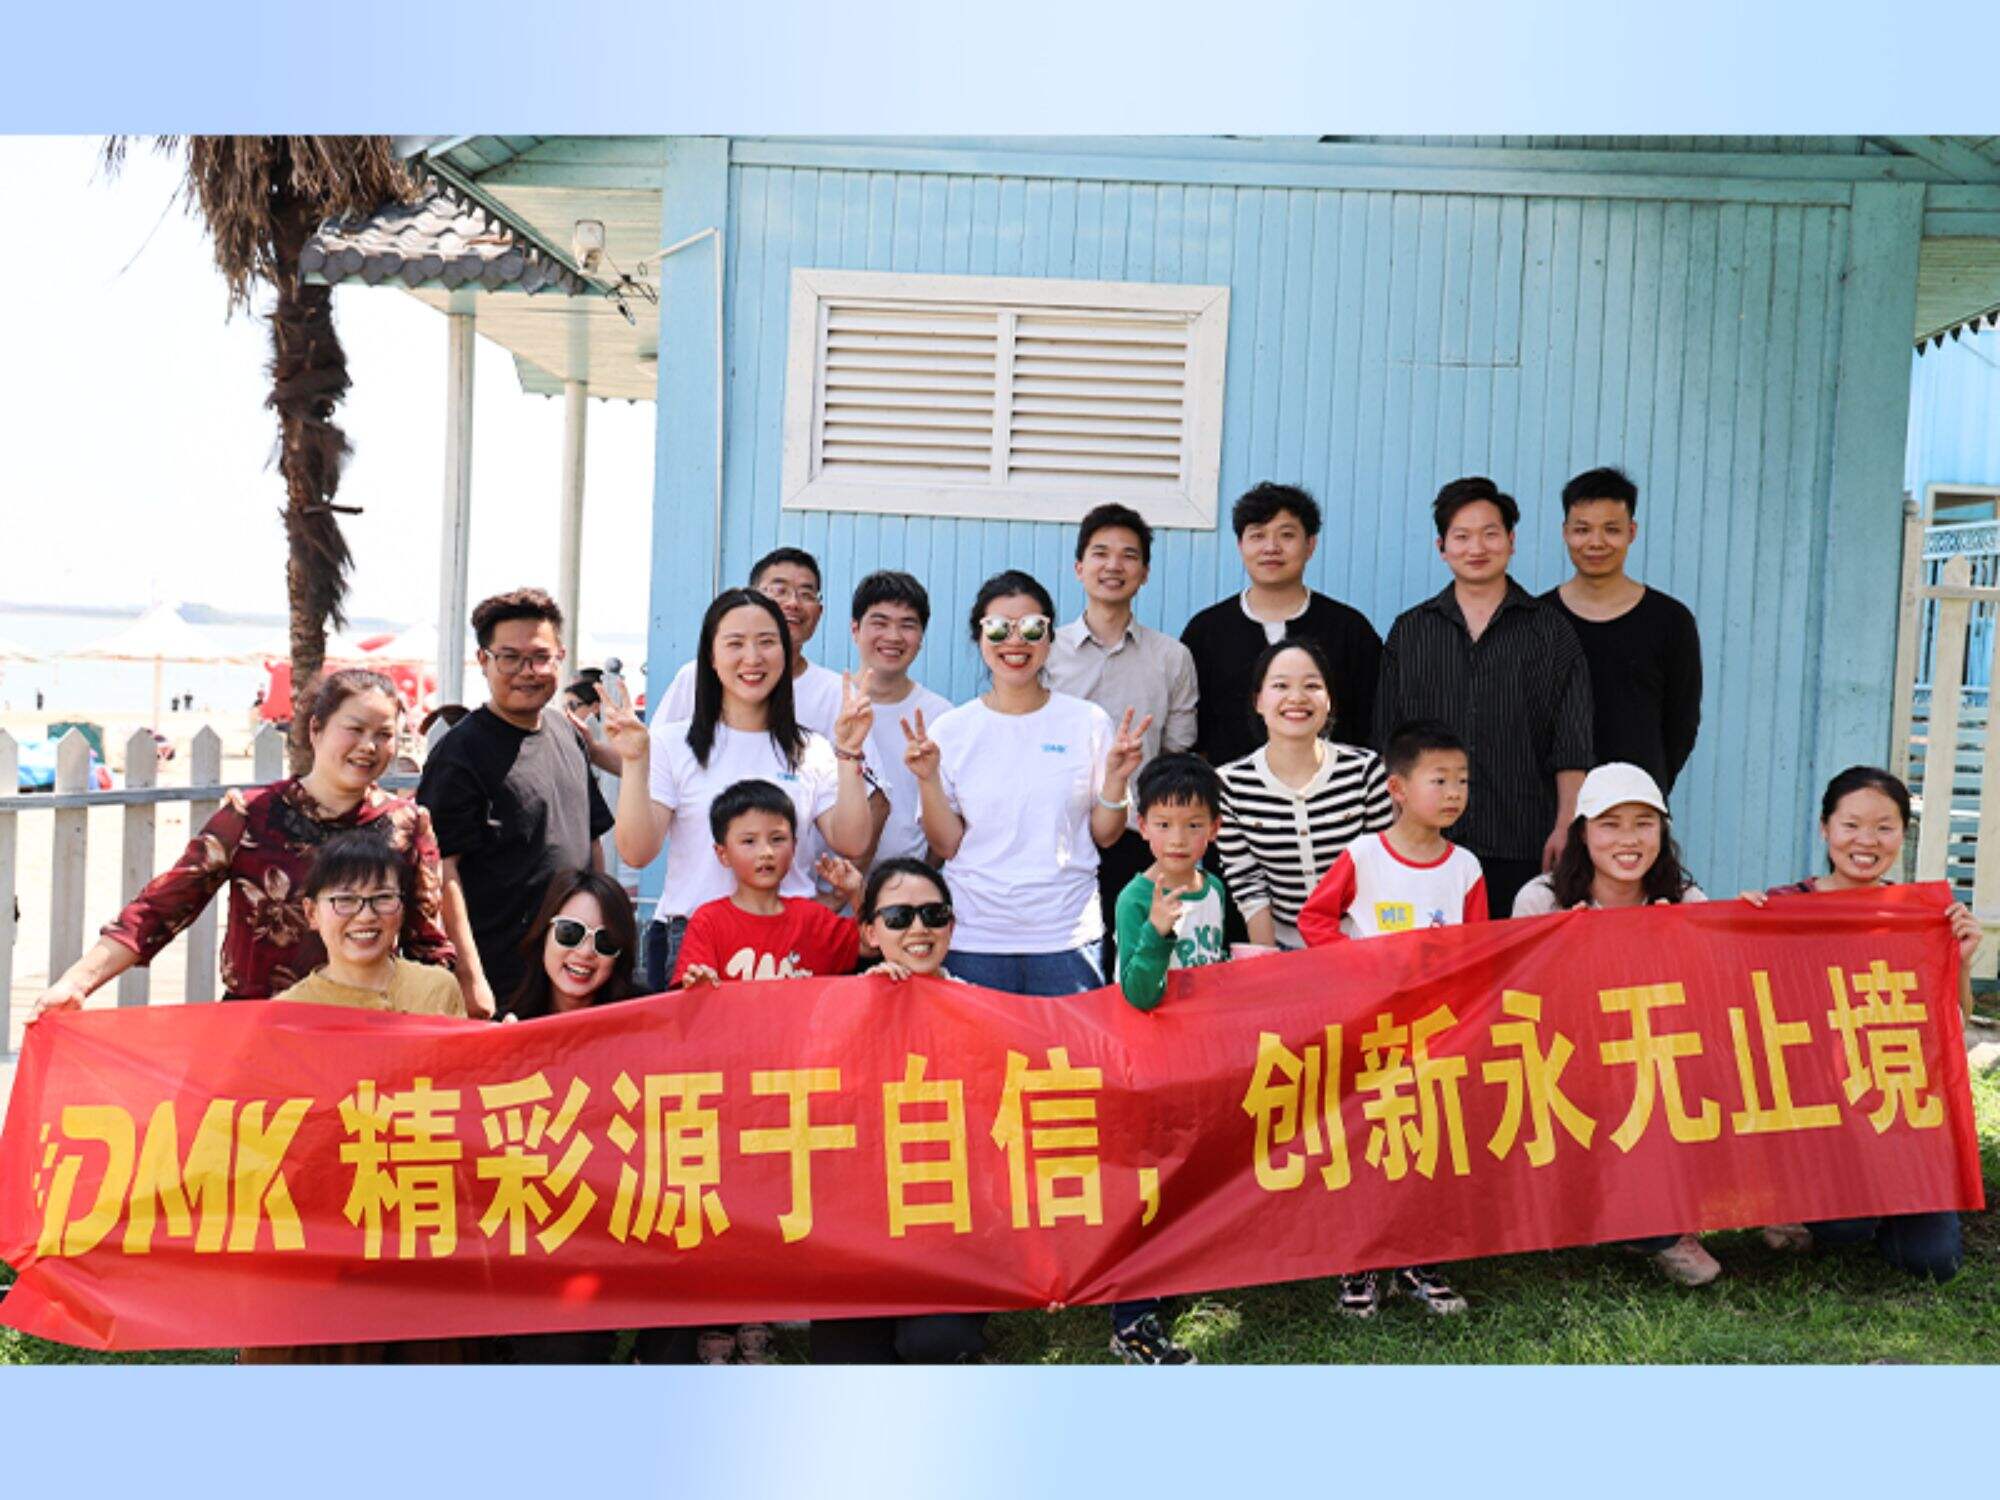 Demark Company holds a grand team building event at Liangzihu Longwan Resort in Wuhan